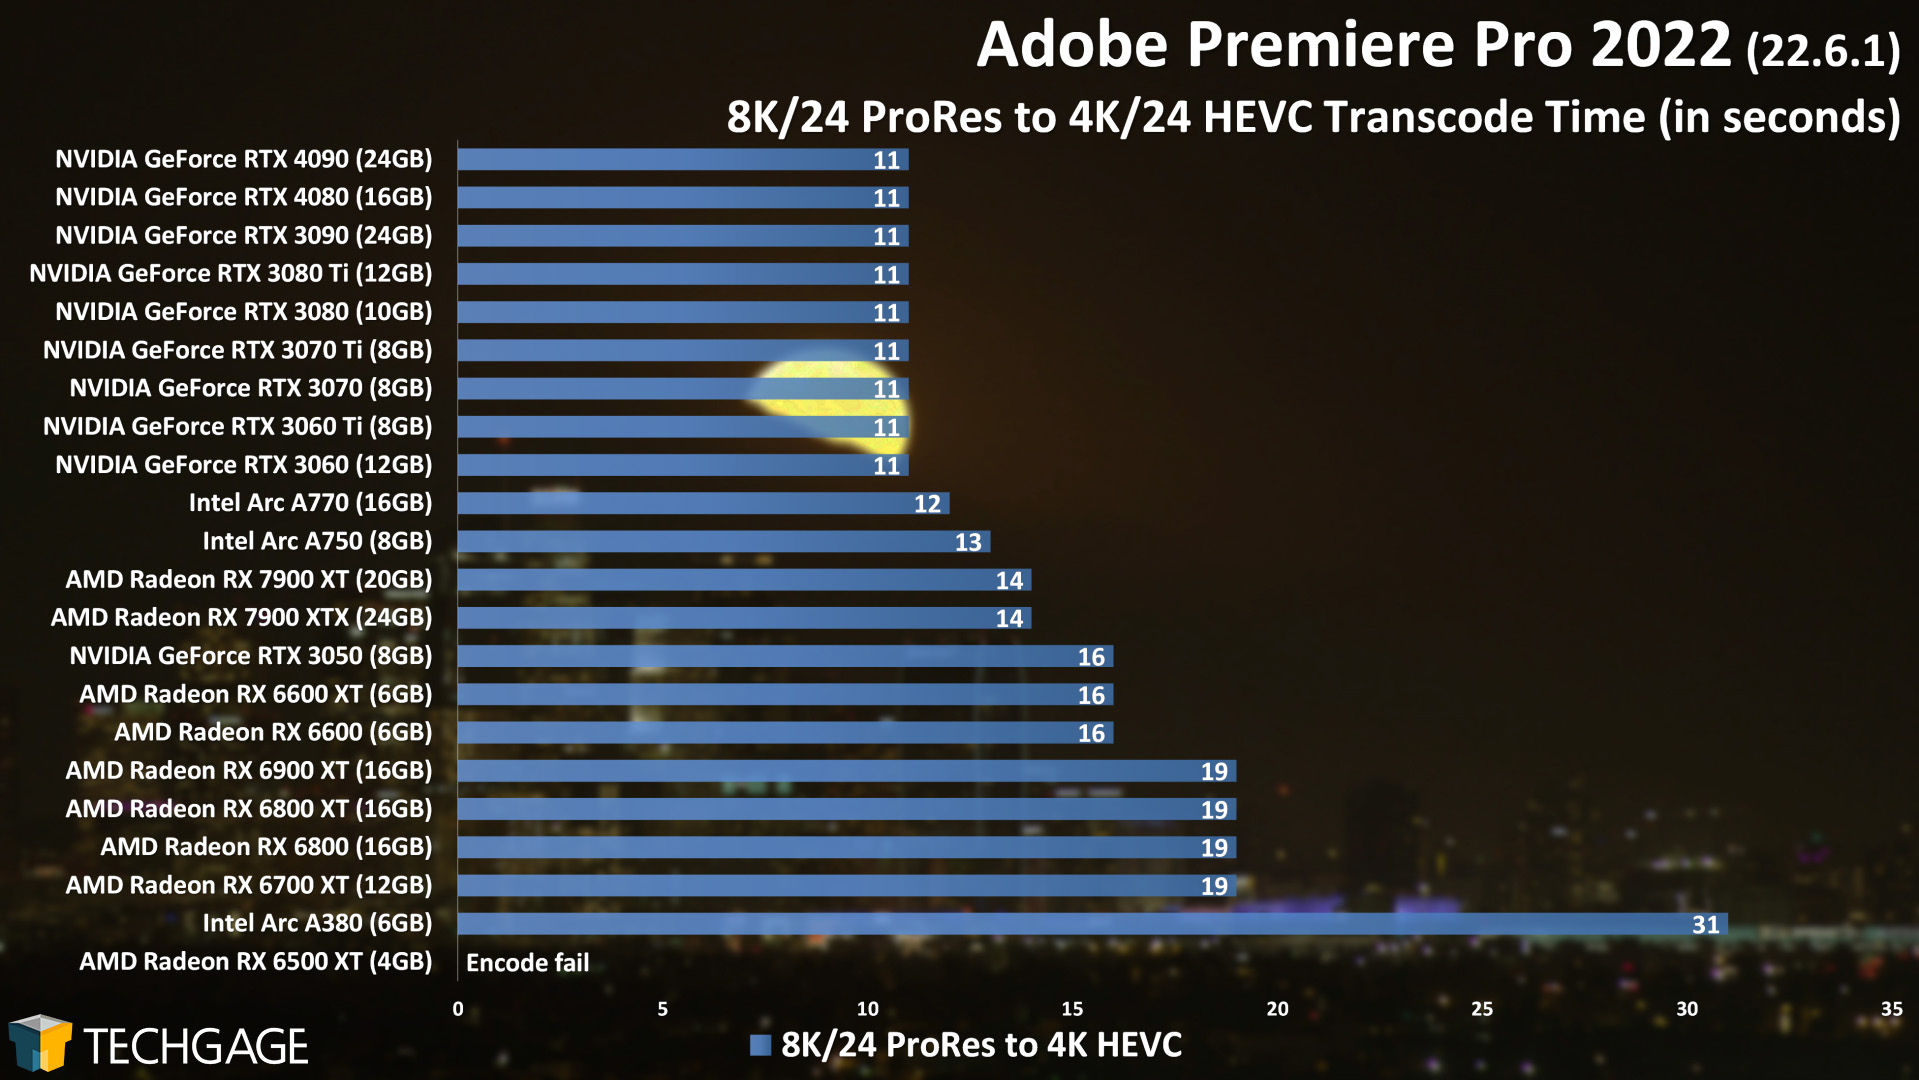 Adobe Premiere Pro 2022 - 8K24 ProRes to 4K24 HEVC GPU Encode Performance (AMD Radeon RX 7900 XT and XTX)